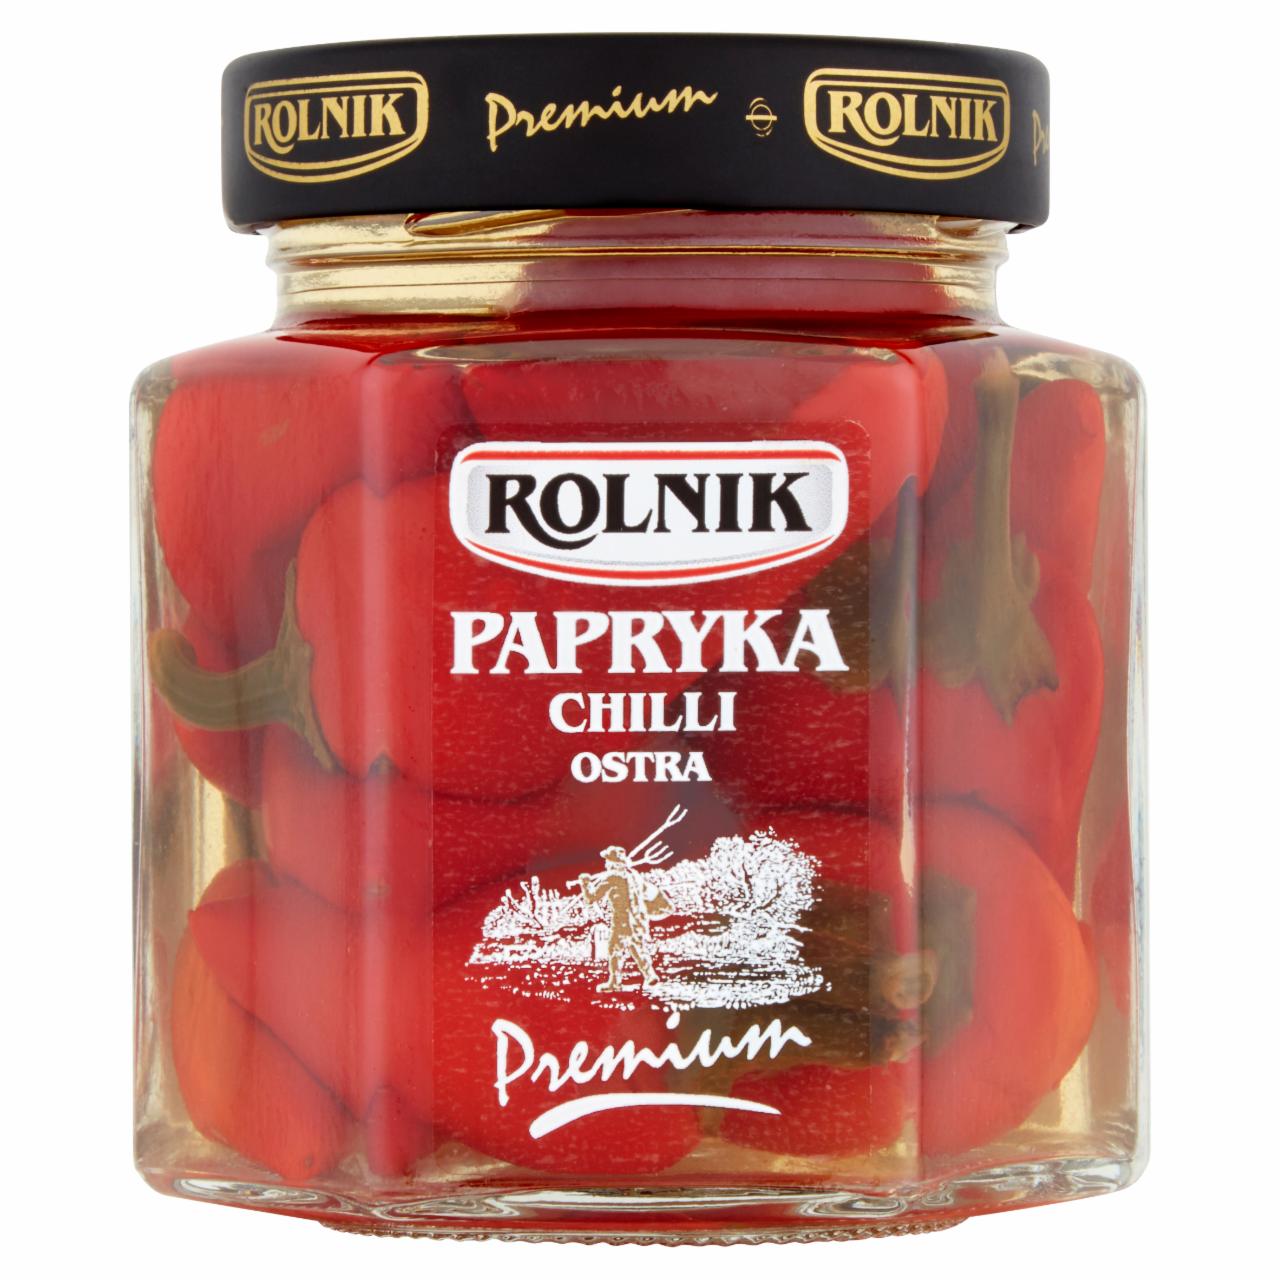 Zdjęcia - Rolnik Premium Papryka chilli ostra 300 g